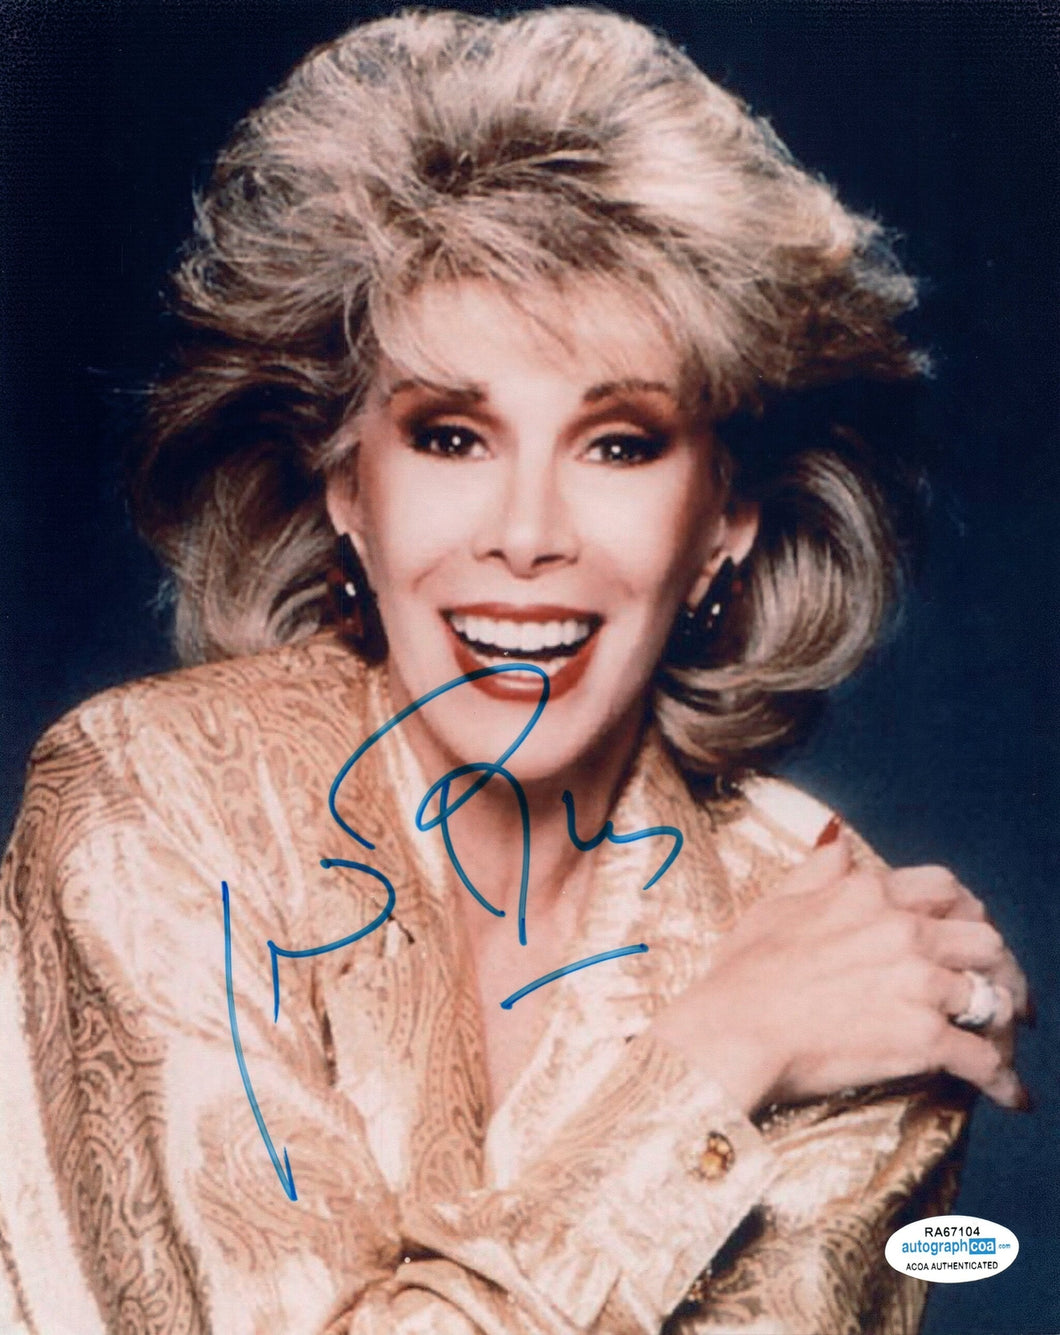 Joan Rivers Autograph 8x10 Photo Stand-Up Comedy Legend Fashion Police E!